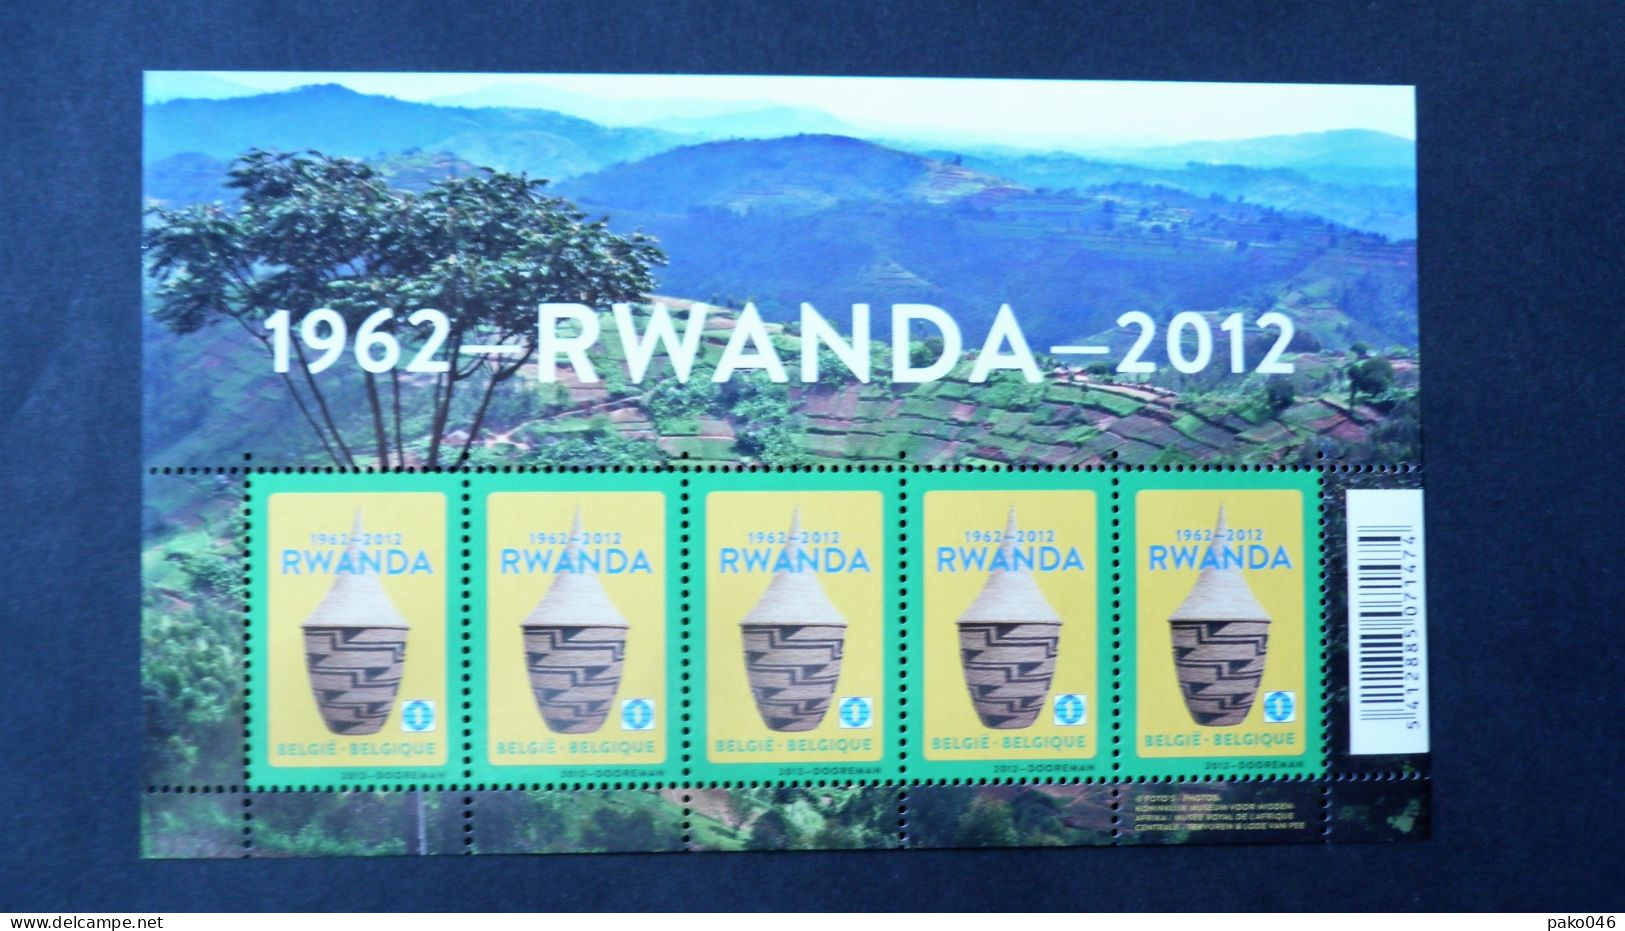 F 4240** – Neuf – 2012 -  50 Ans D'indépendance Du Rwanda Et Du Burundi 1962-2012 – Feuillet Avec 5 Timbres 1W - 2011-2020